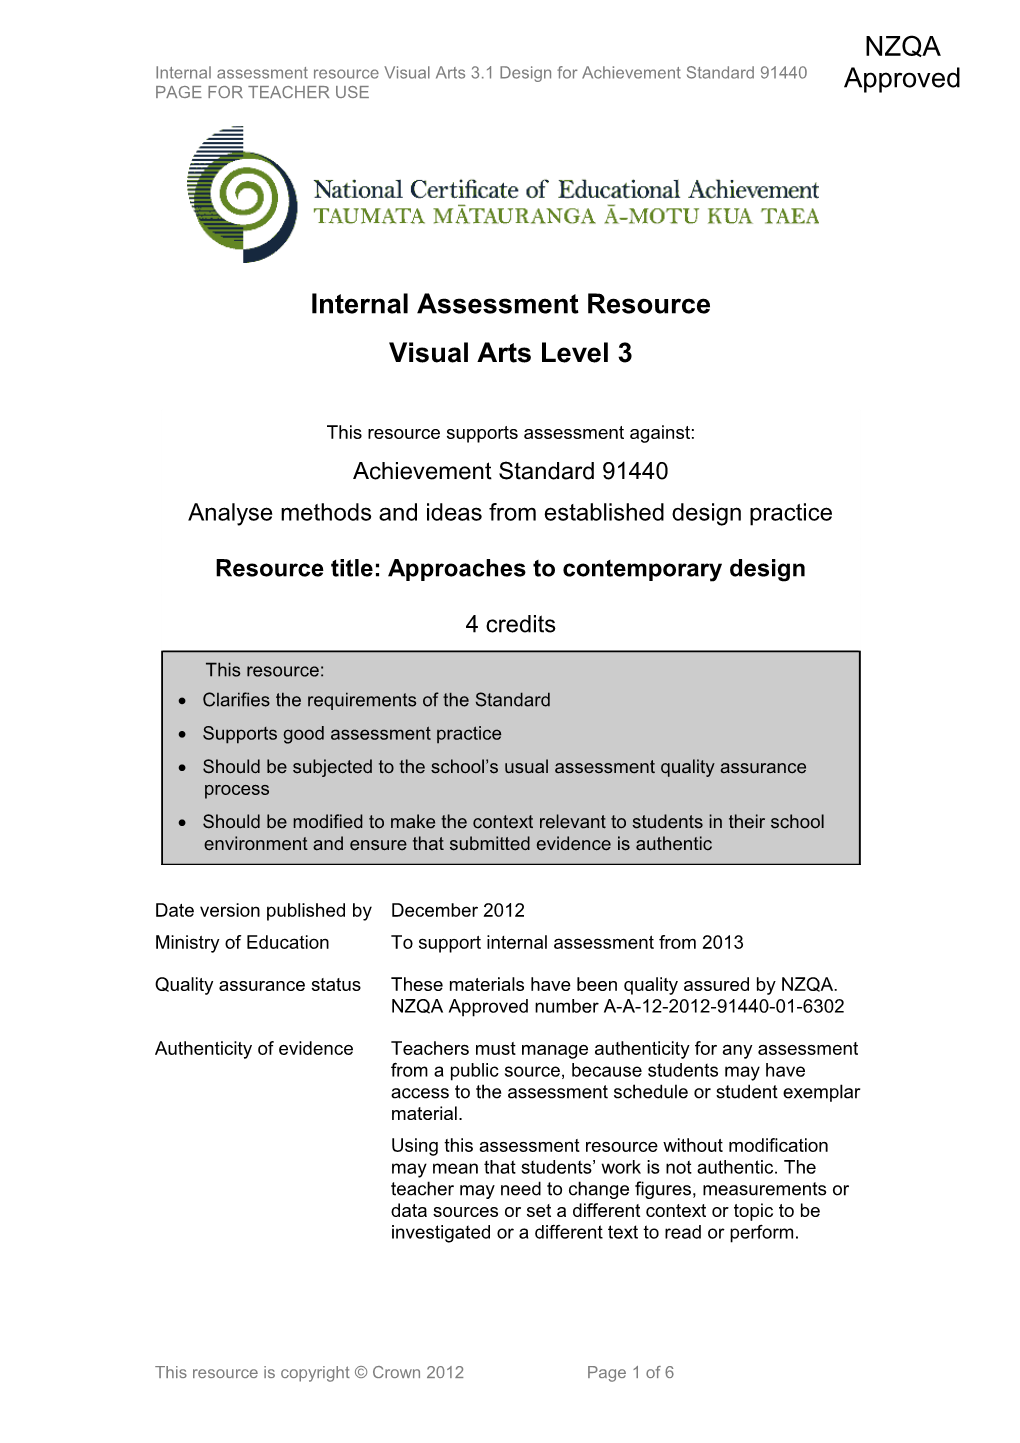 Level 3 Visual Arts Design Internal Assessment Resource